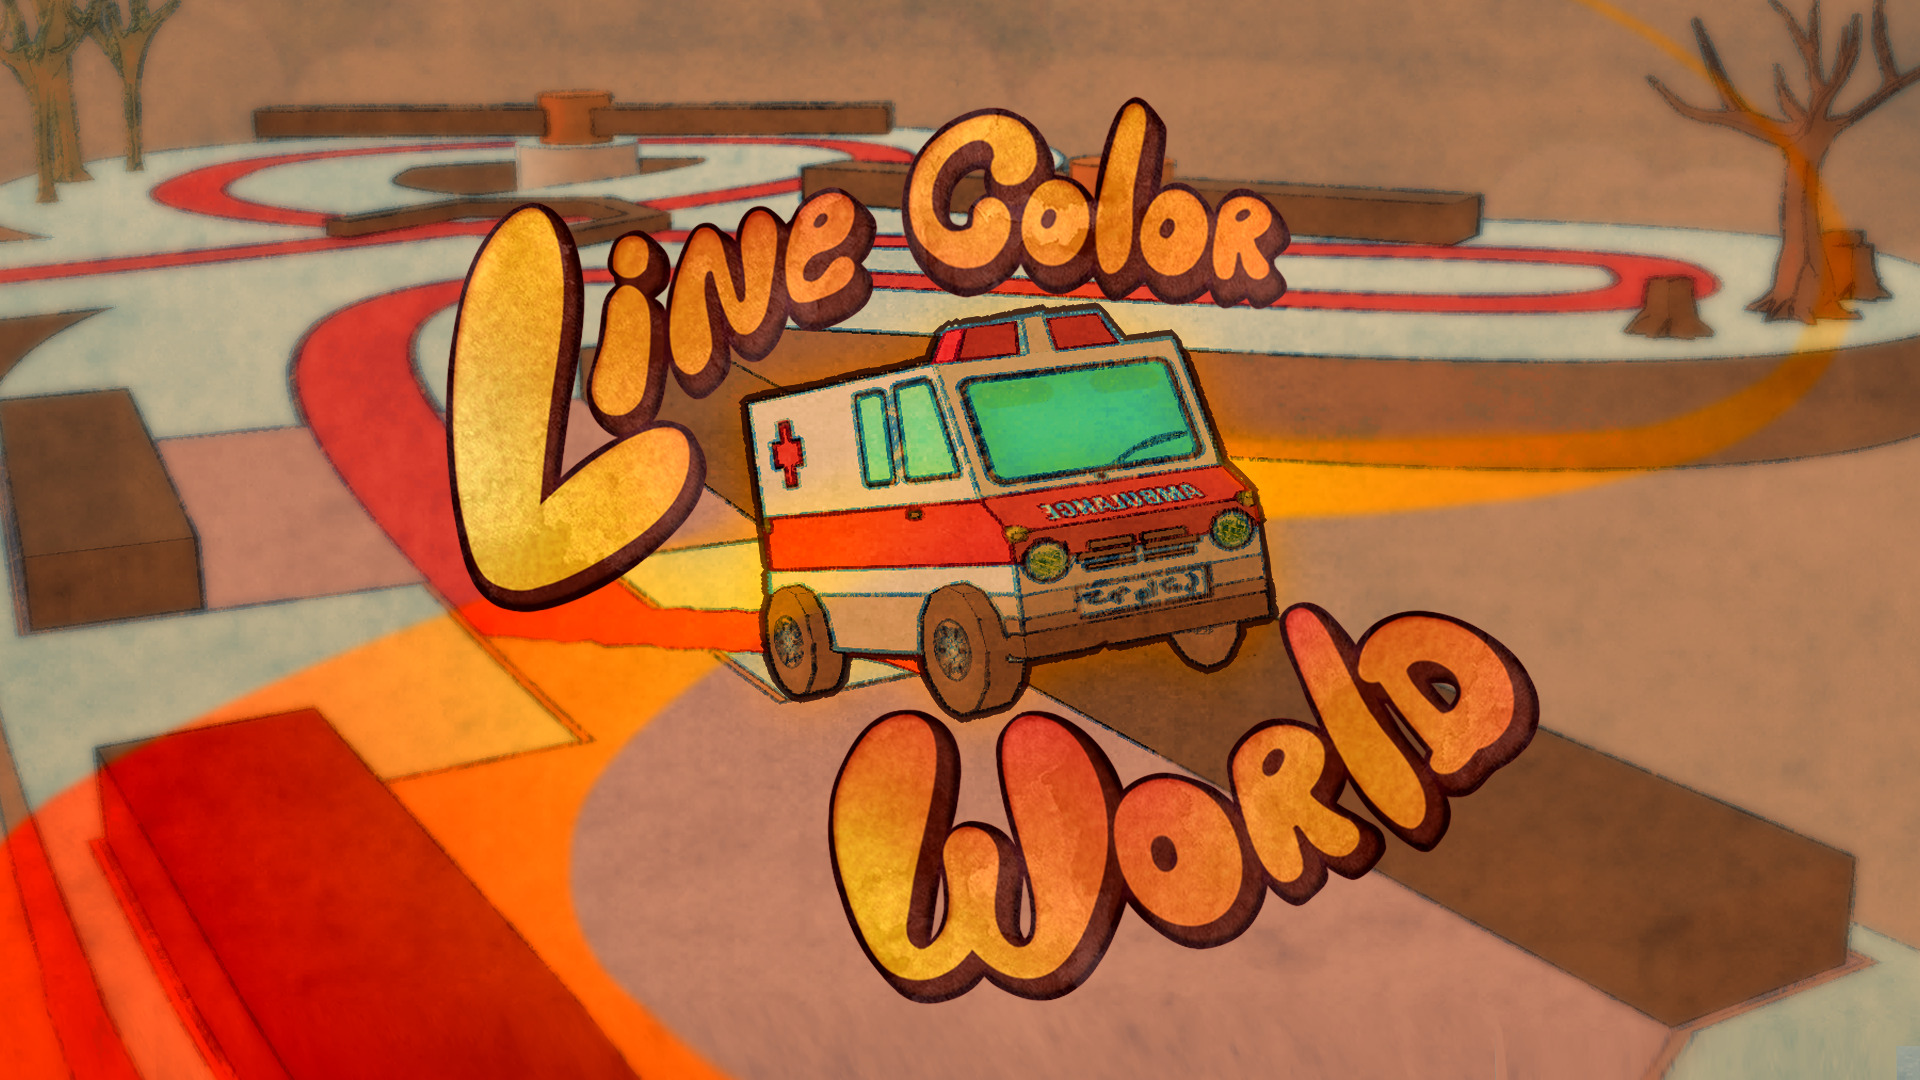 Line Color World